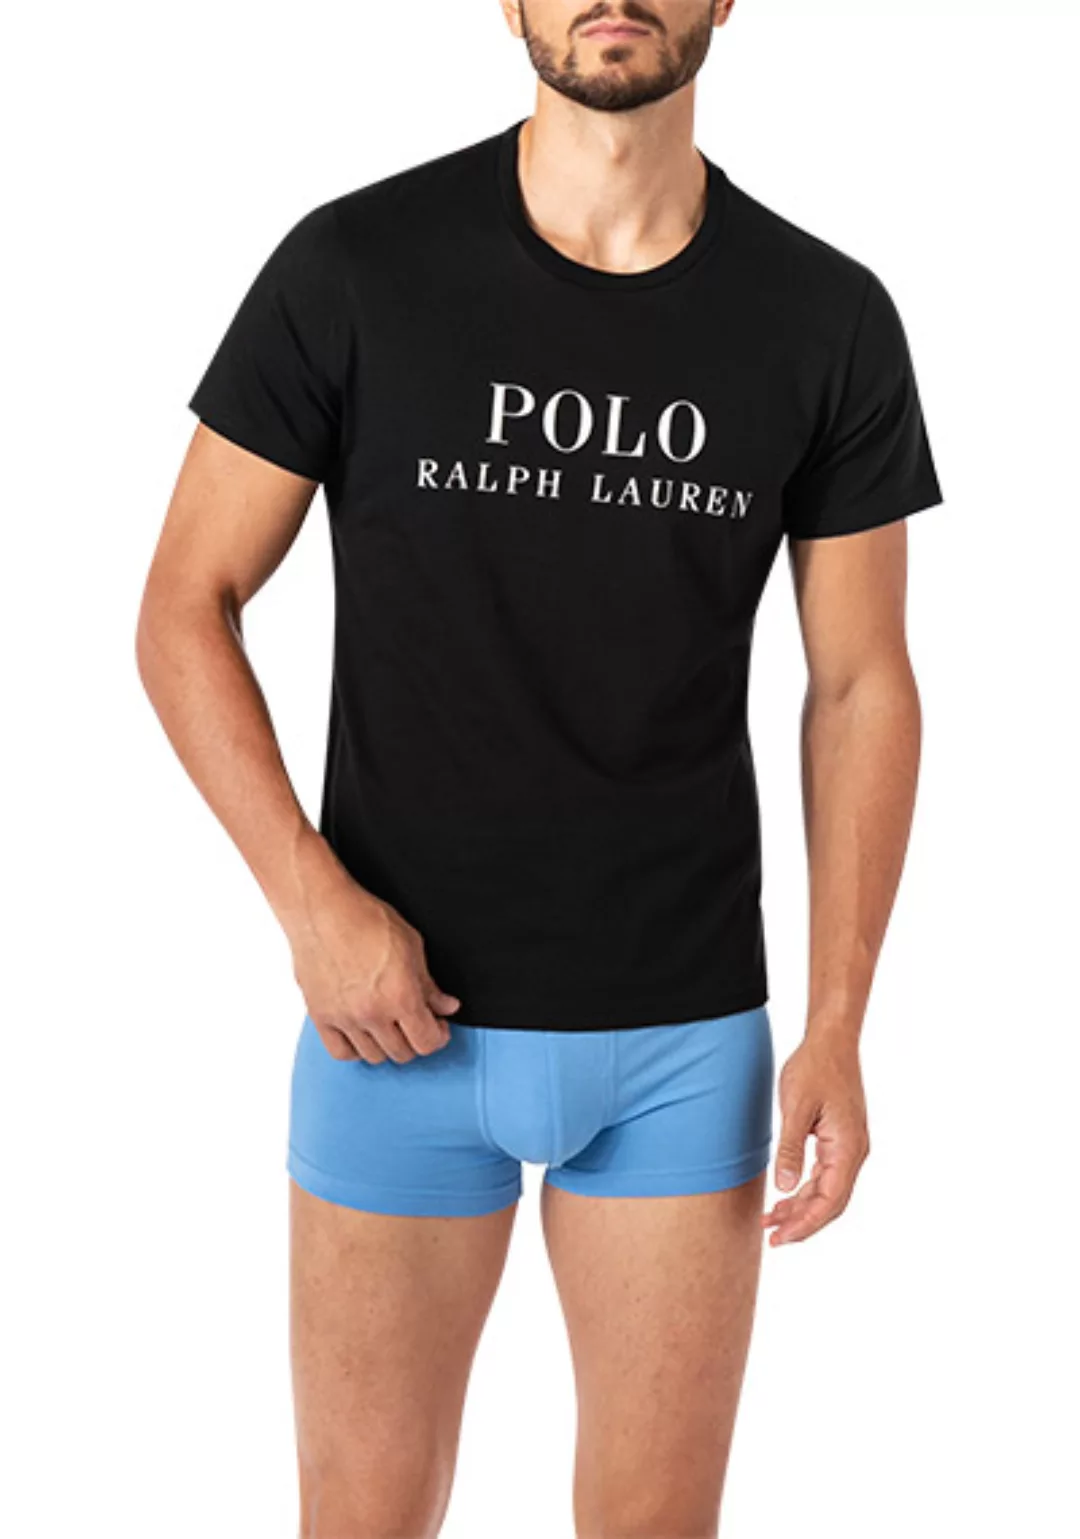 Polo Ralph Lauren Sleep Top 714830278/007 günstig online kaufen